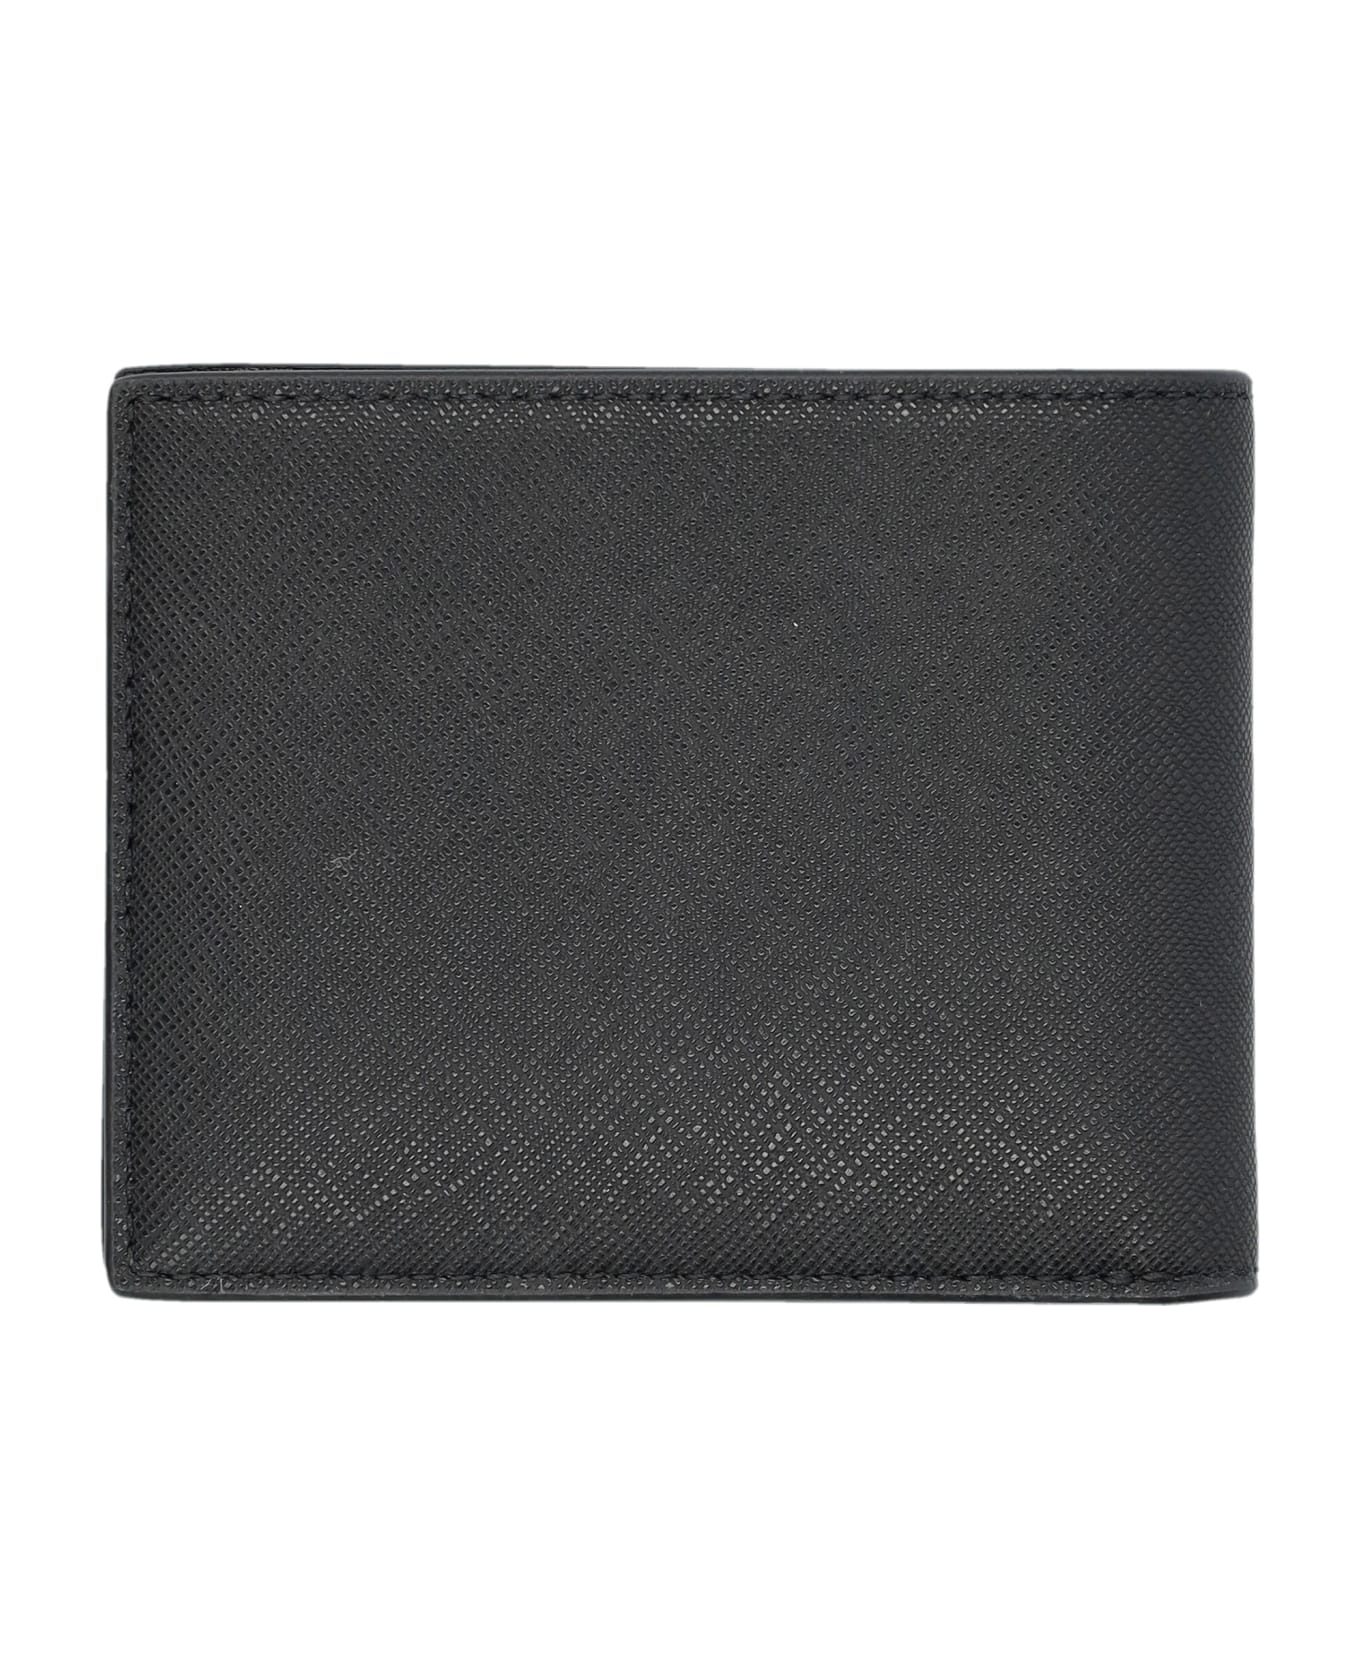 Bally Bevye Wallet - BLACK 財布